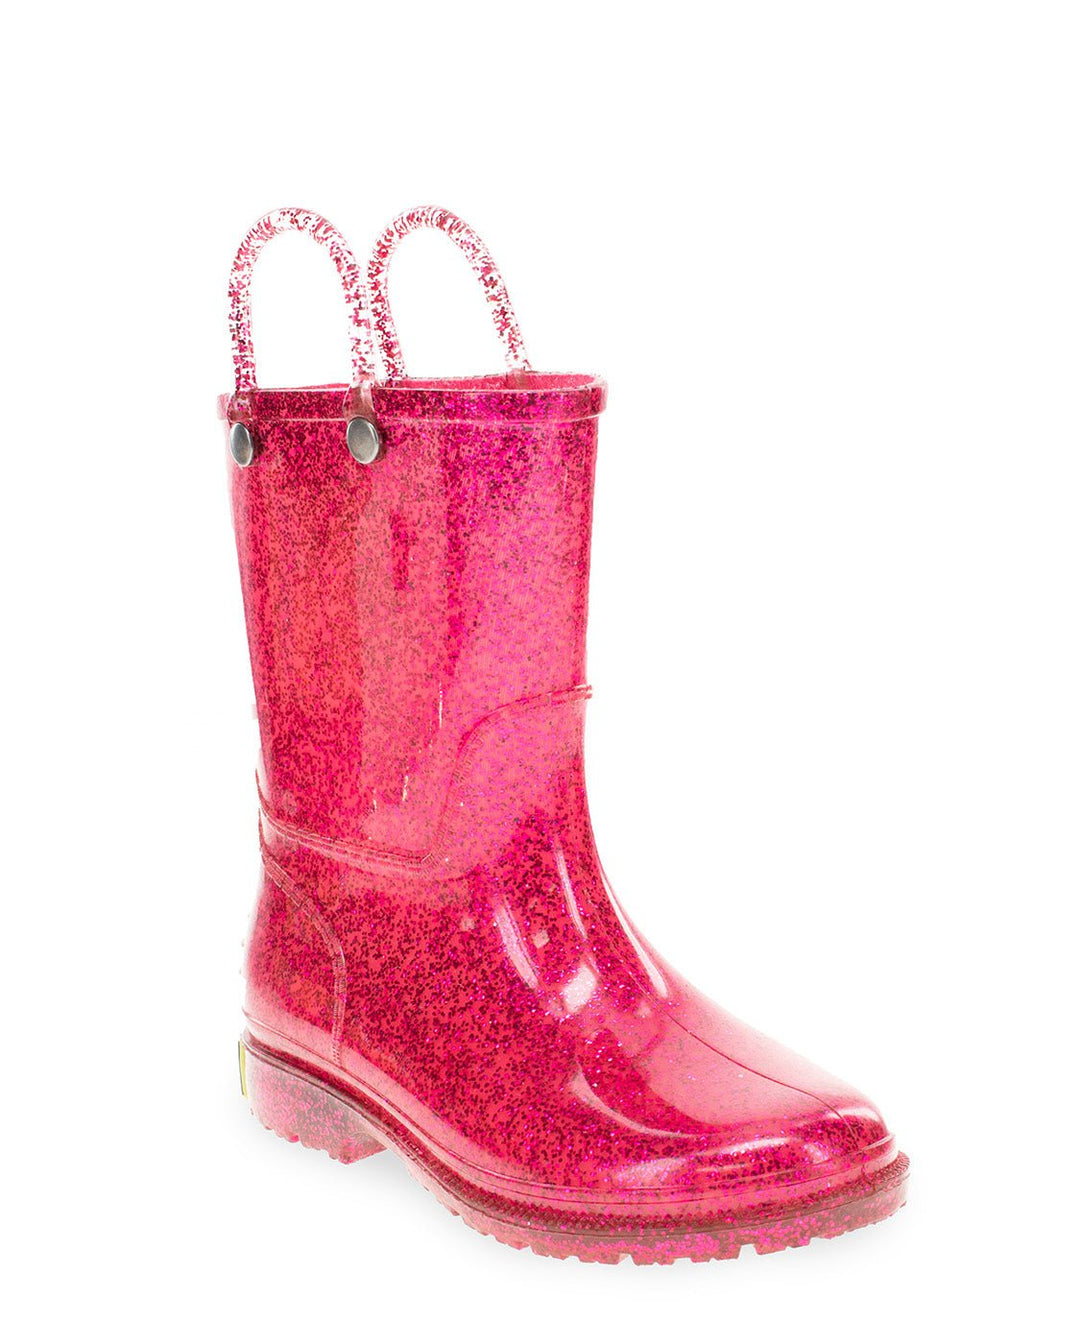 Kids Glitter Rain Boot - Pink - Western Chief